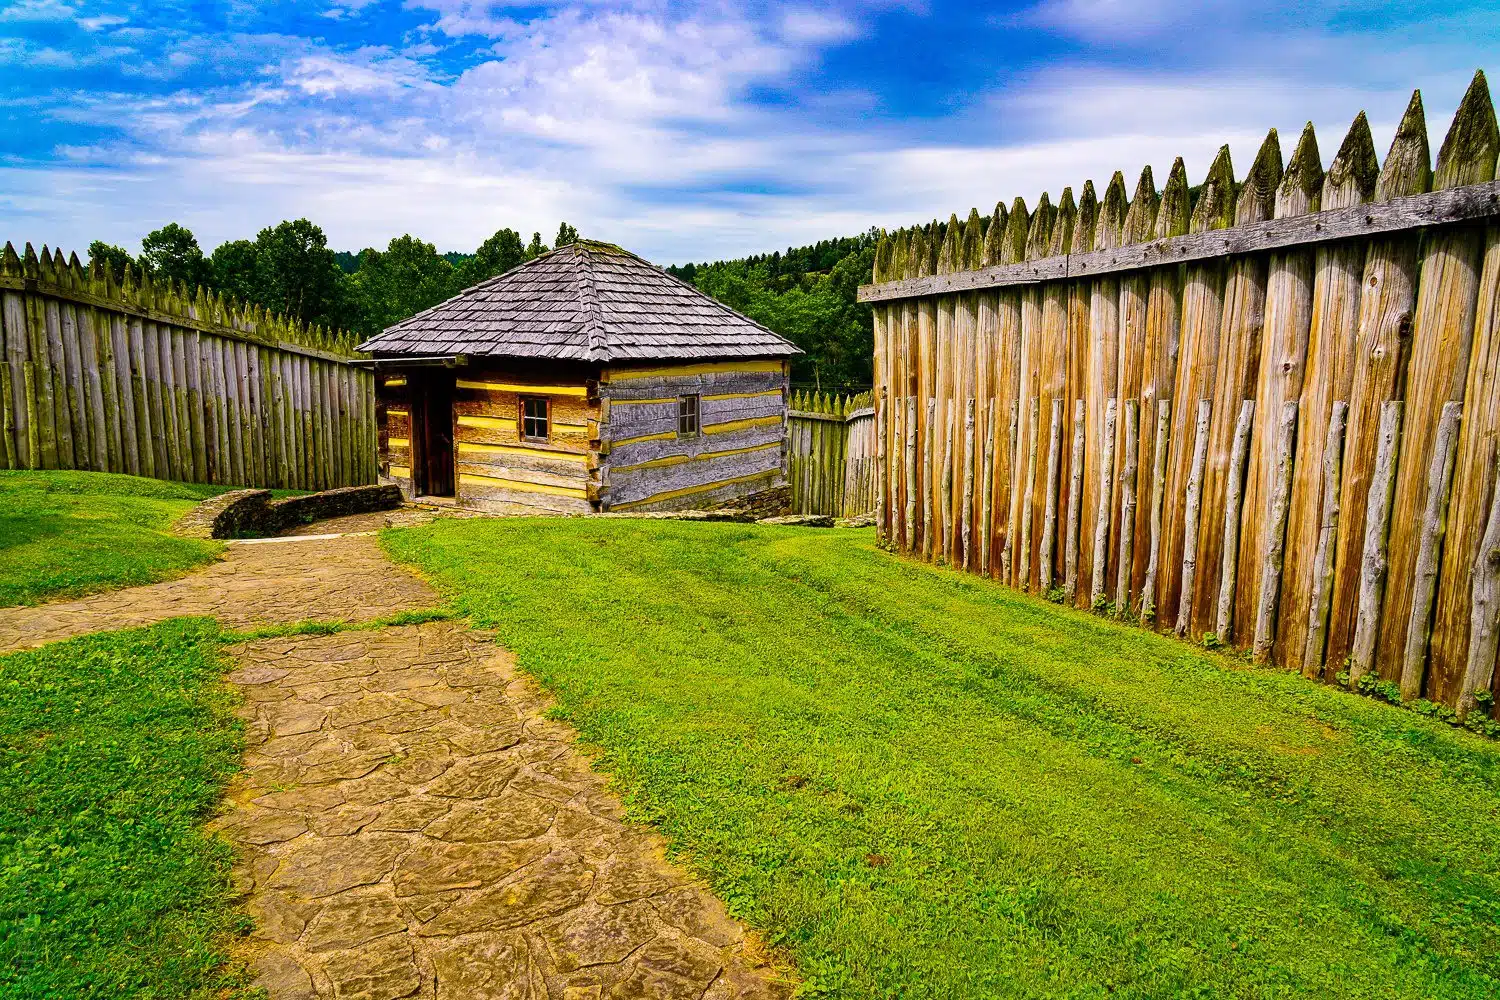 Fort Ligonier has 18th century American history.